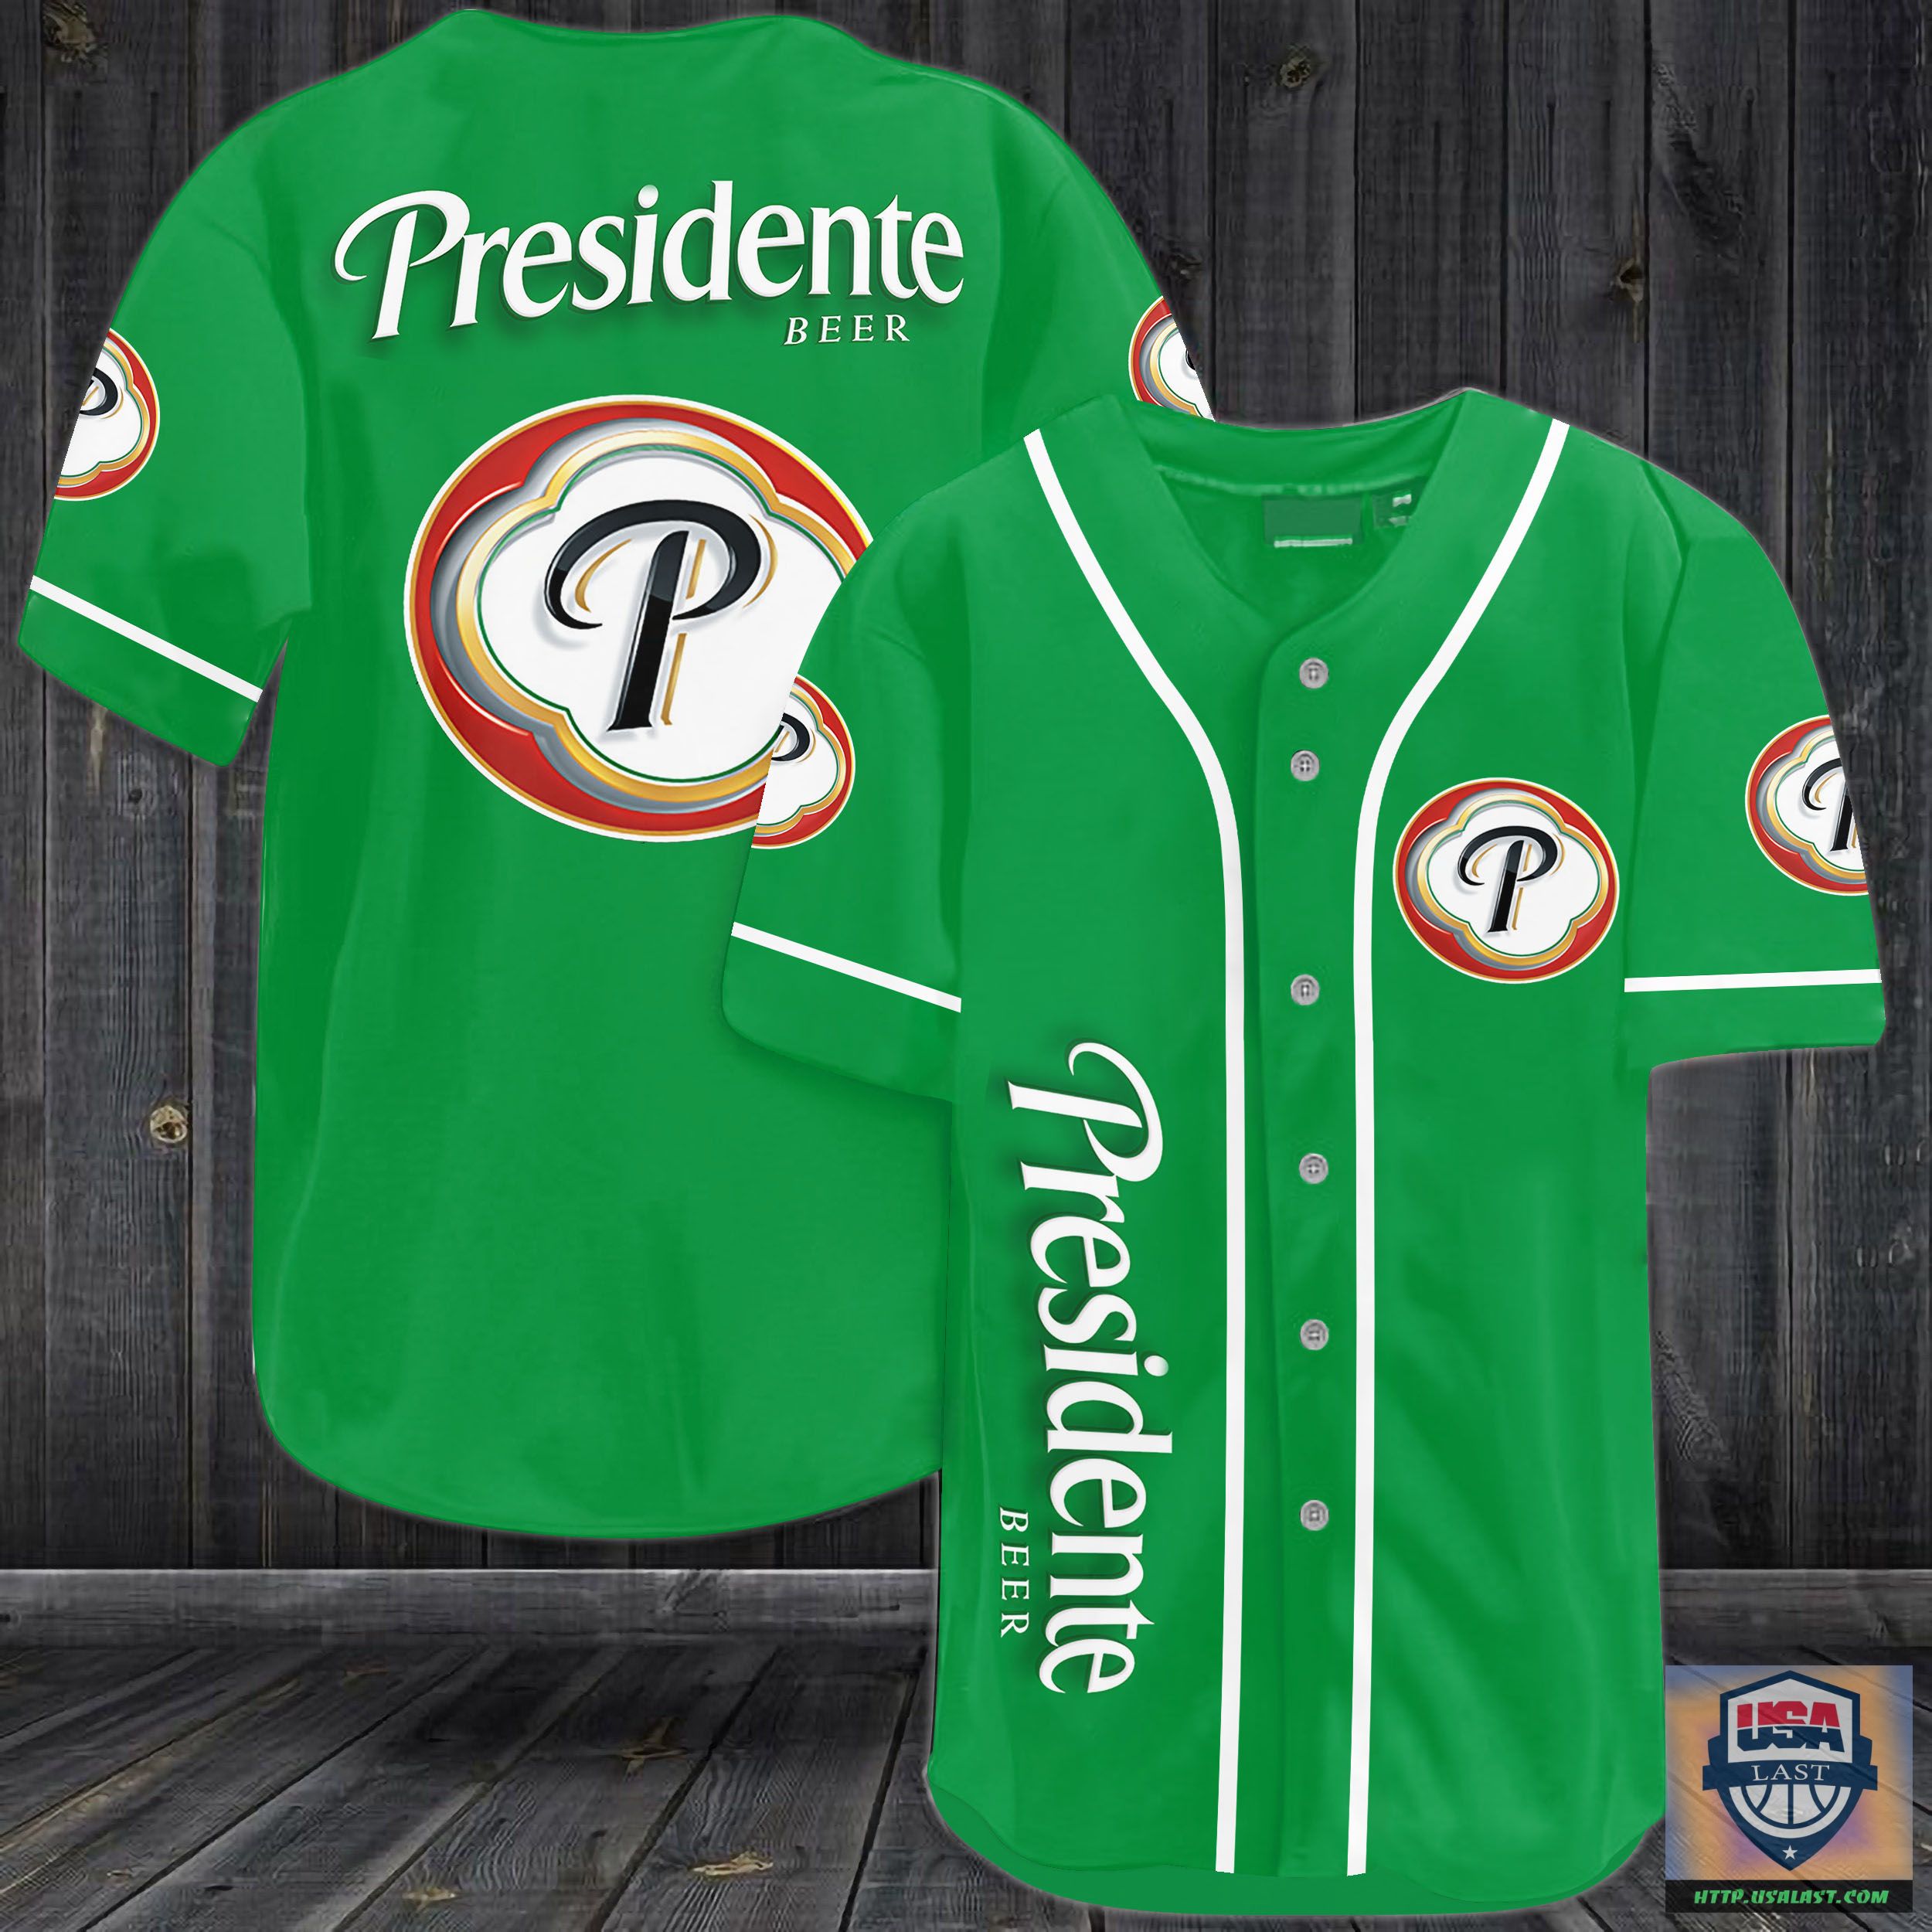 Presidente Beer Baseball Jersey – Usalast